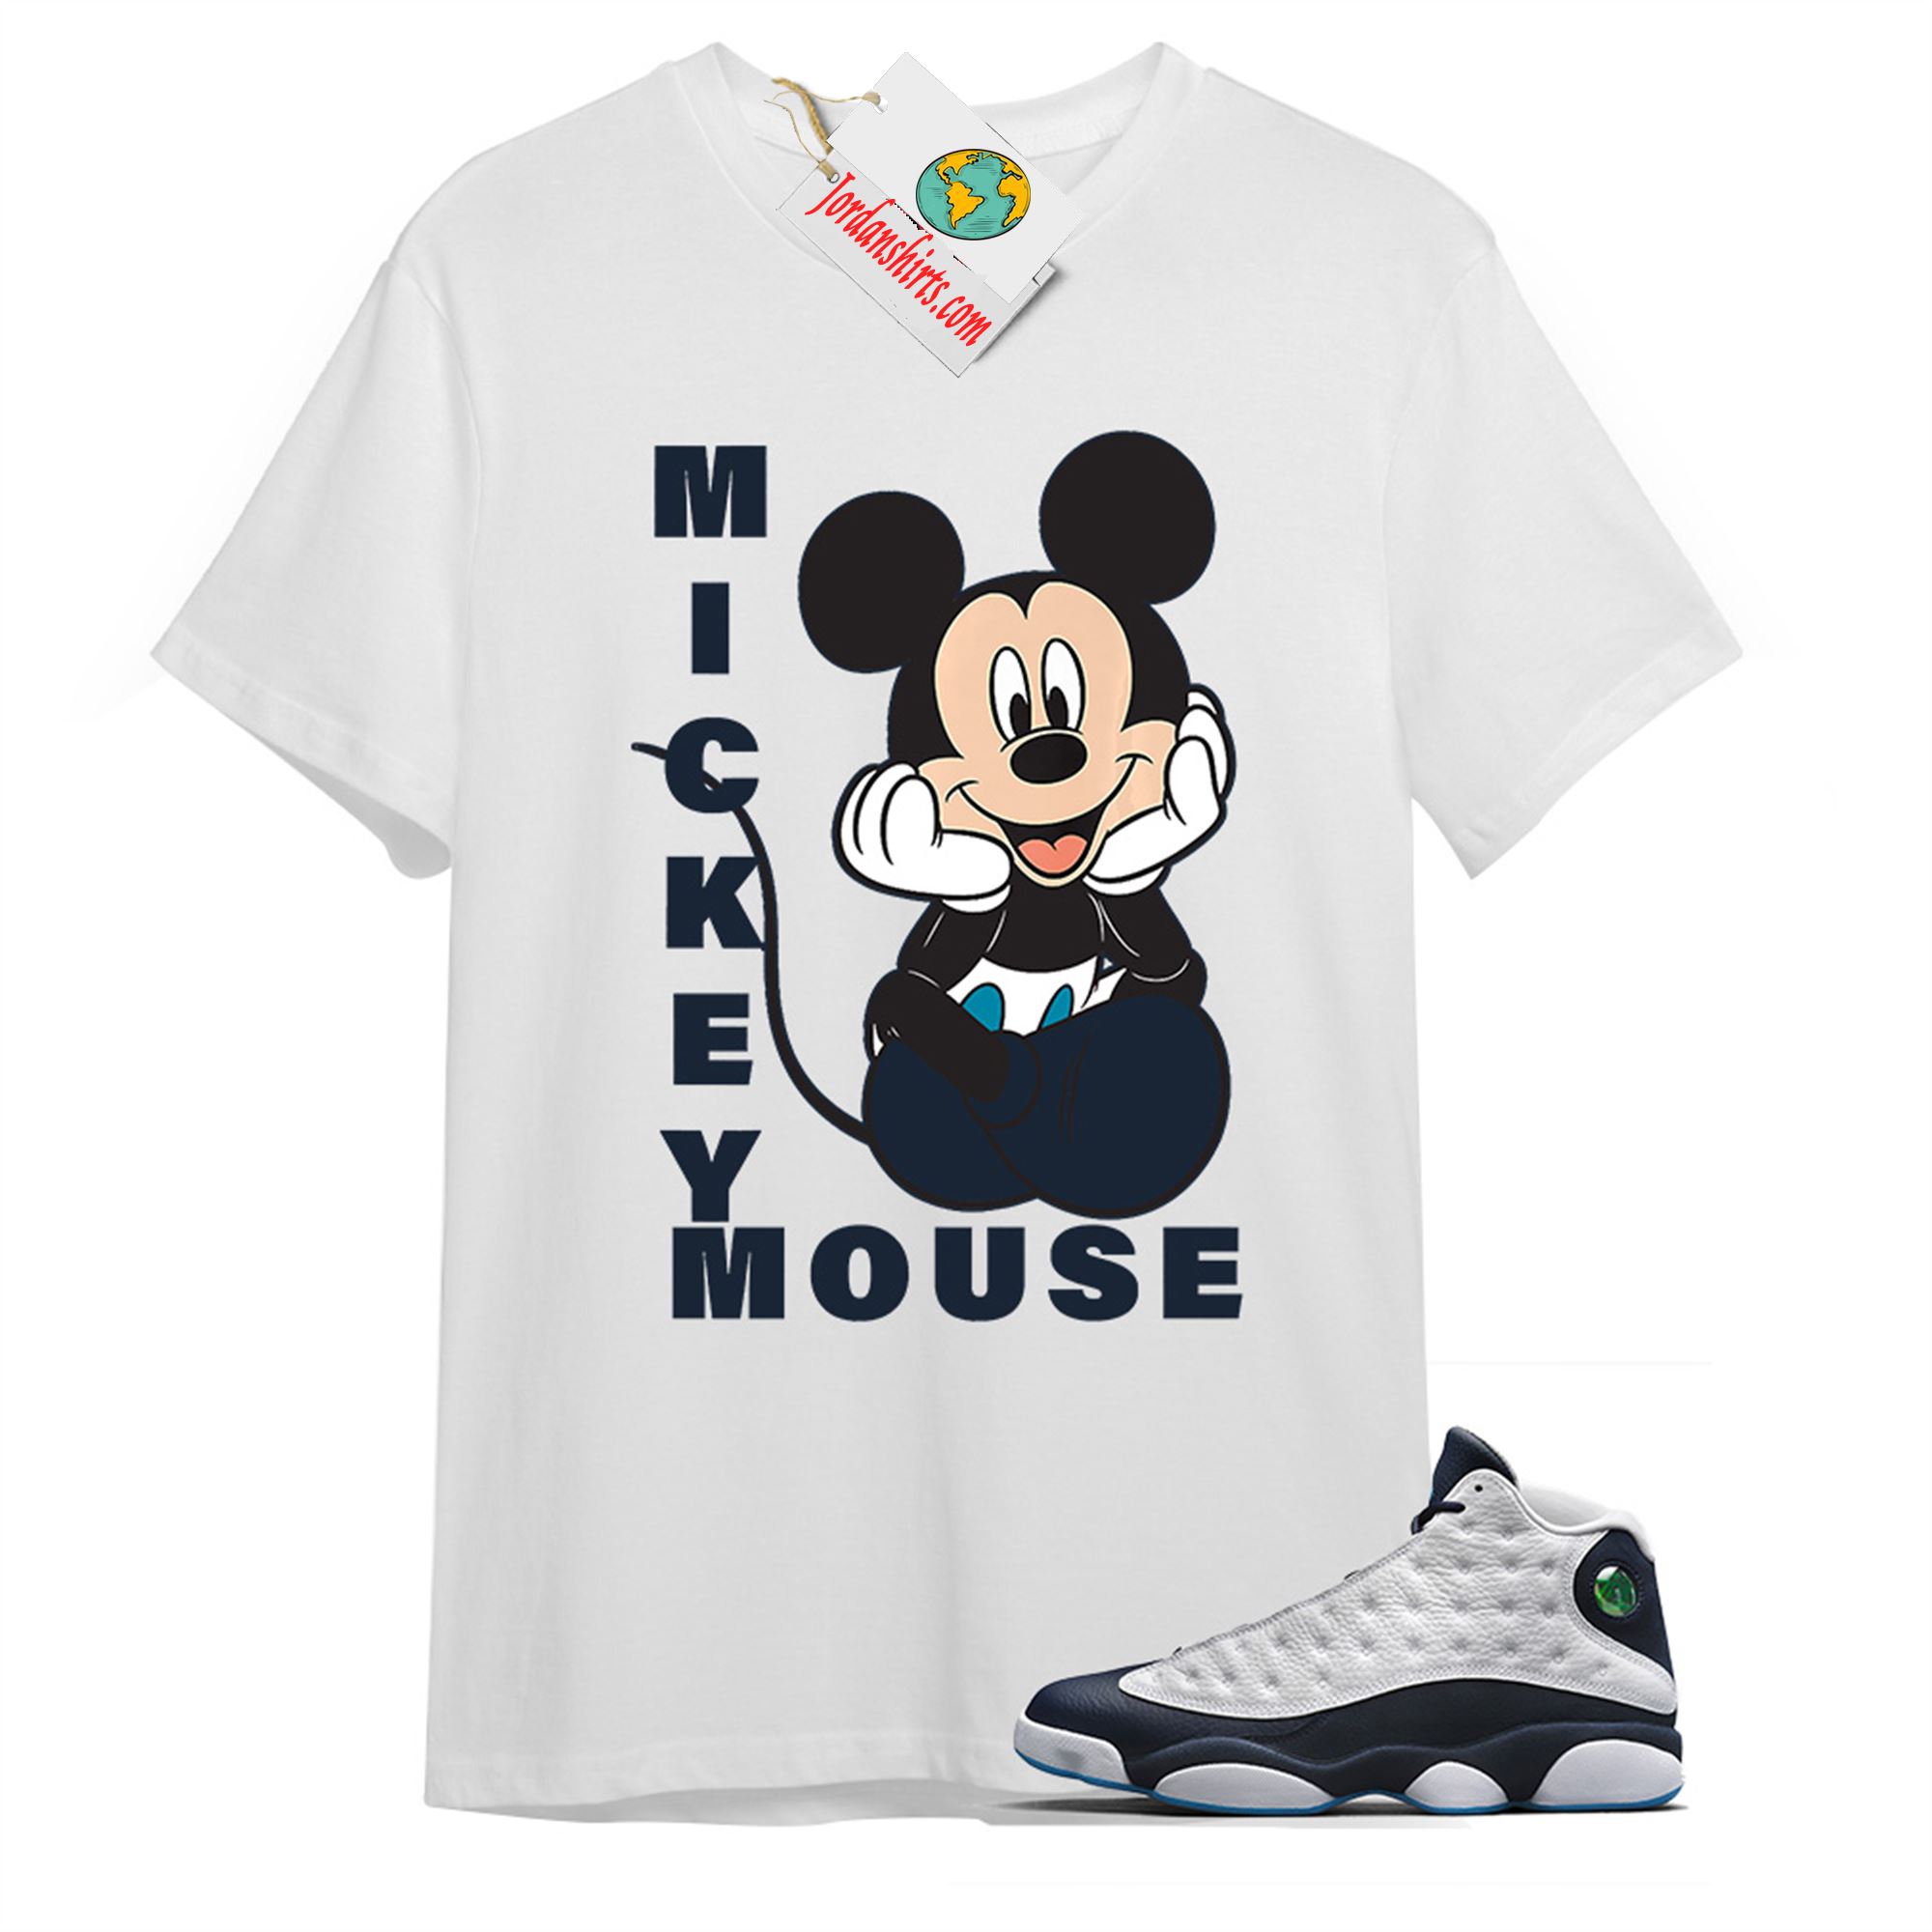 Jordan 13 Shirt, Disney Mickey Mouse Hands In Face White T-shirt Air Jordan 13 Obsidian 13s Full Size Up To 5xl